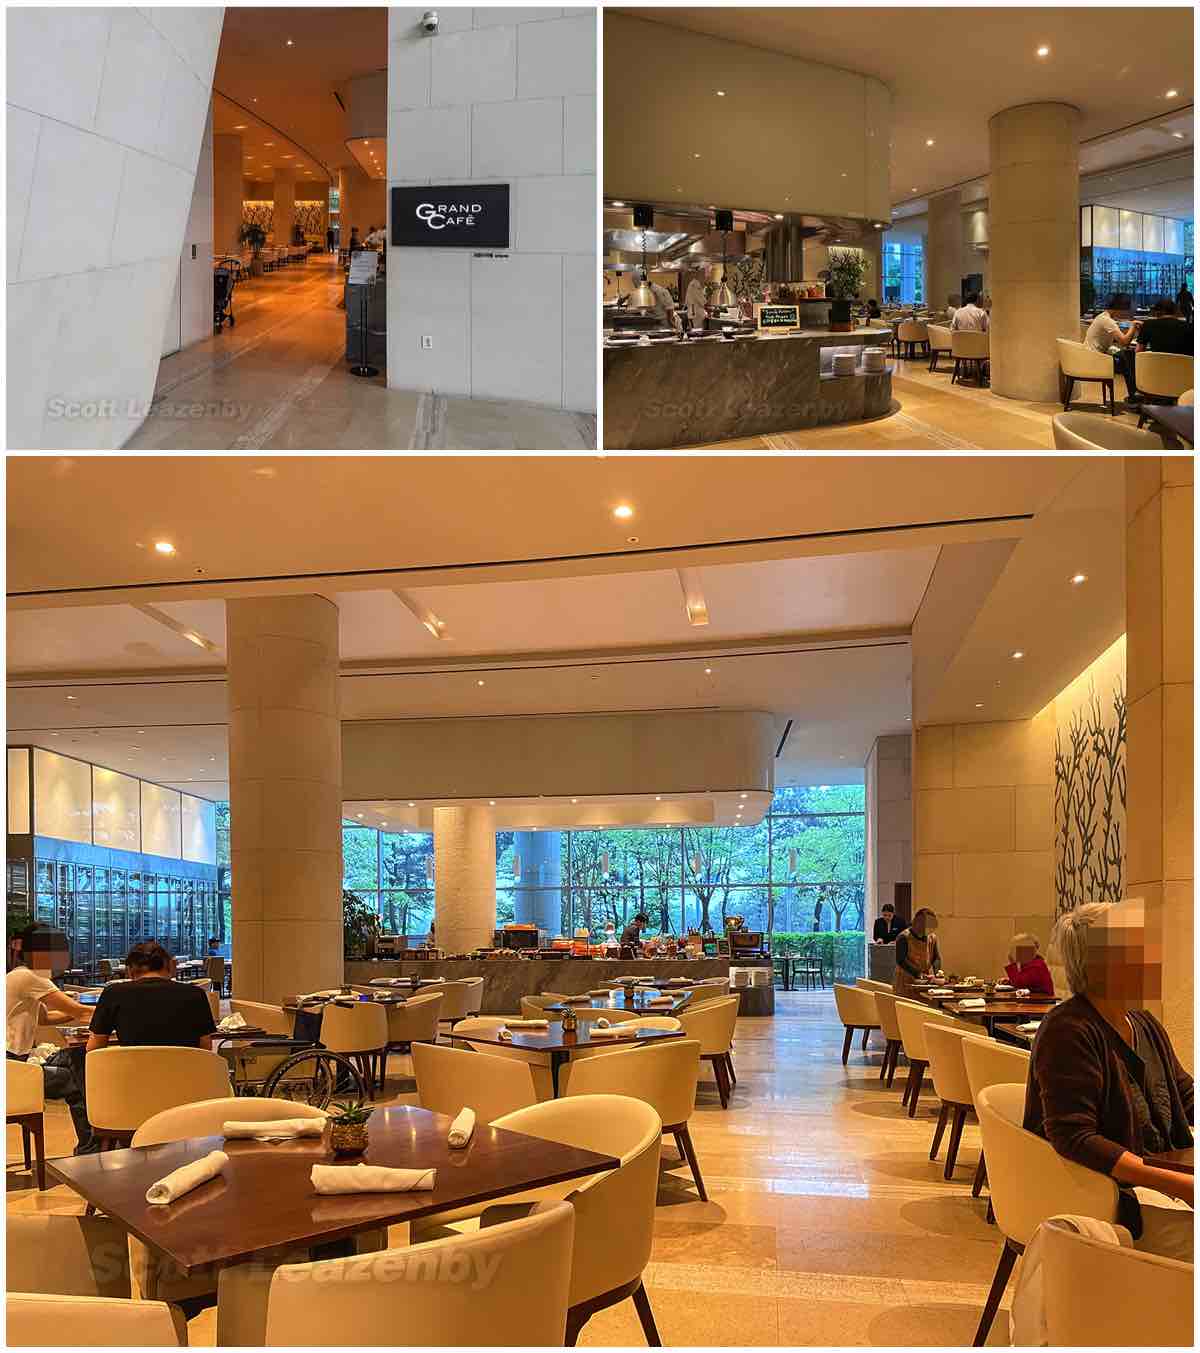 Incheon Grand Hyatt Grand Café